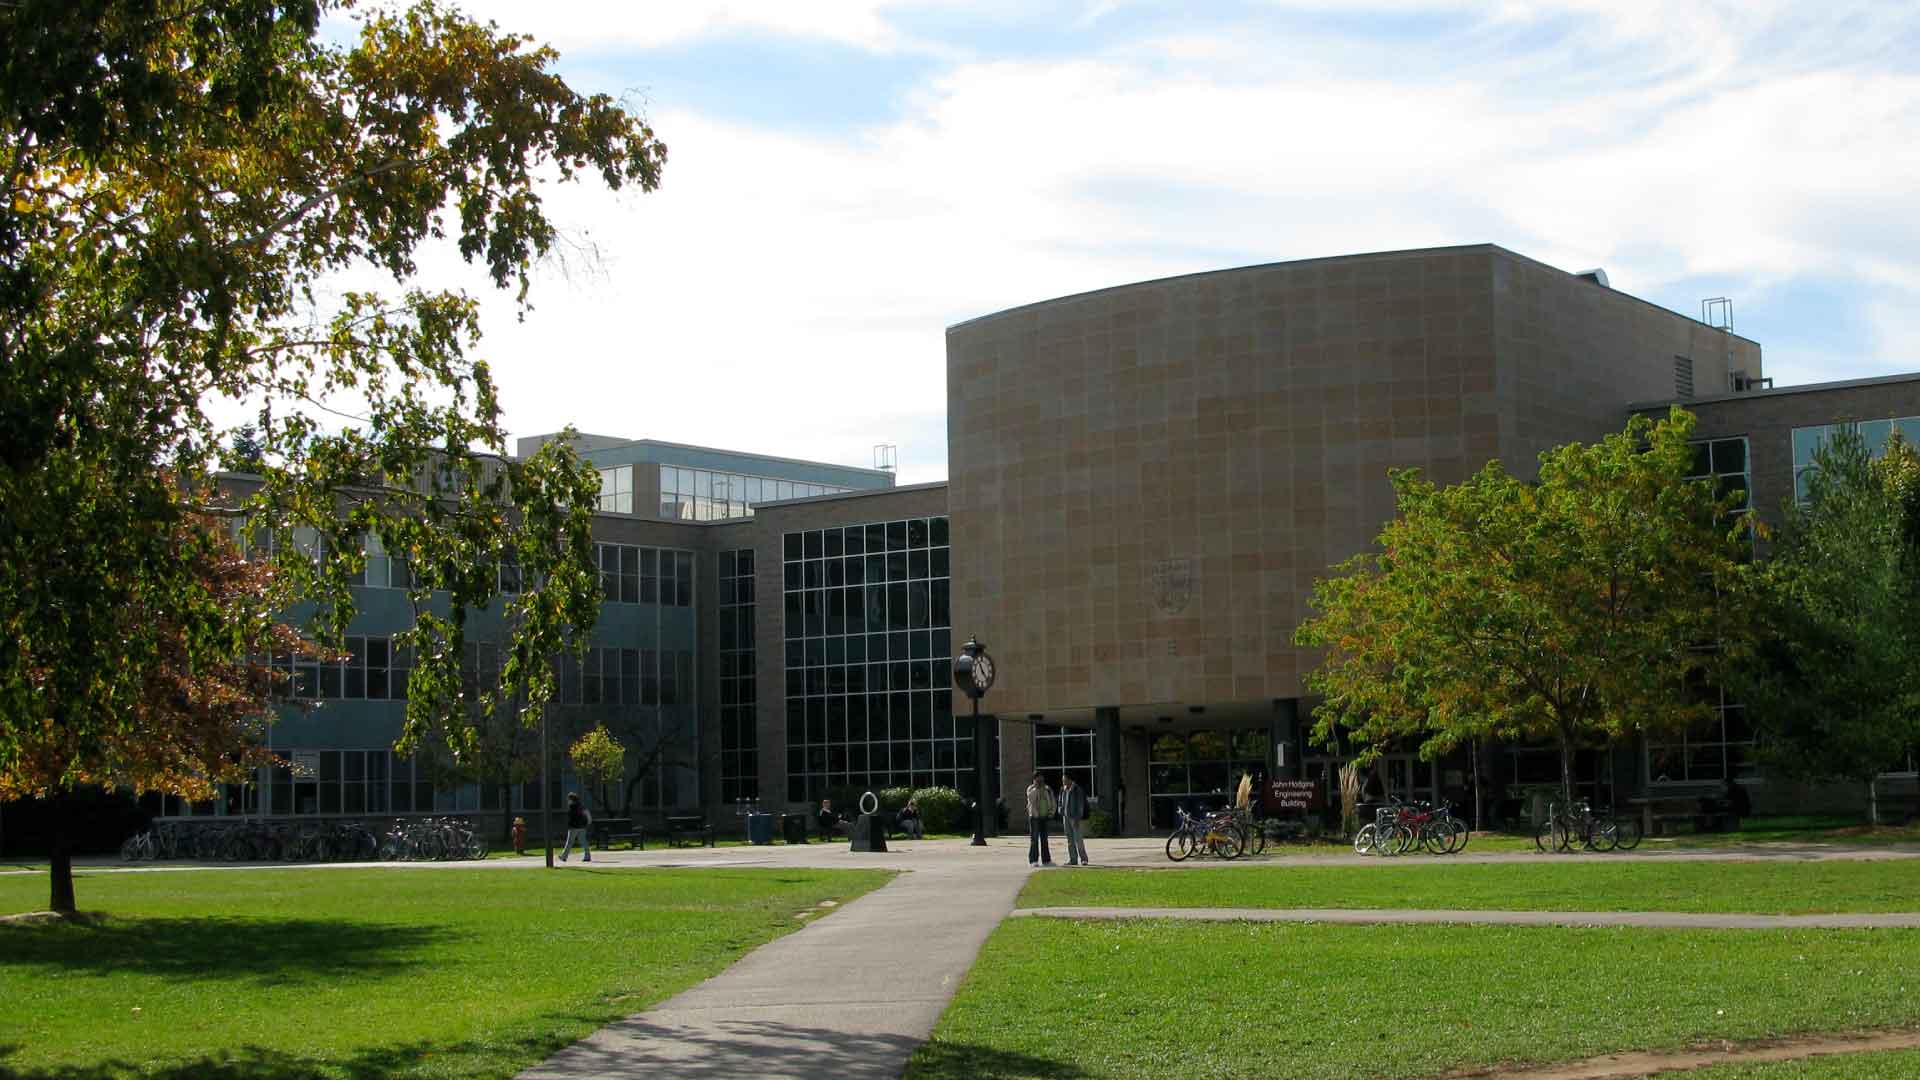 John Hodgins Building at McMaster University